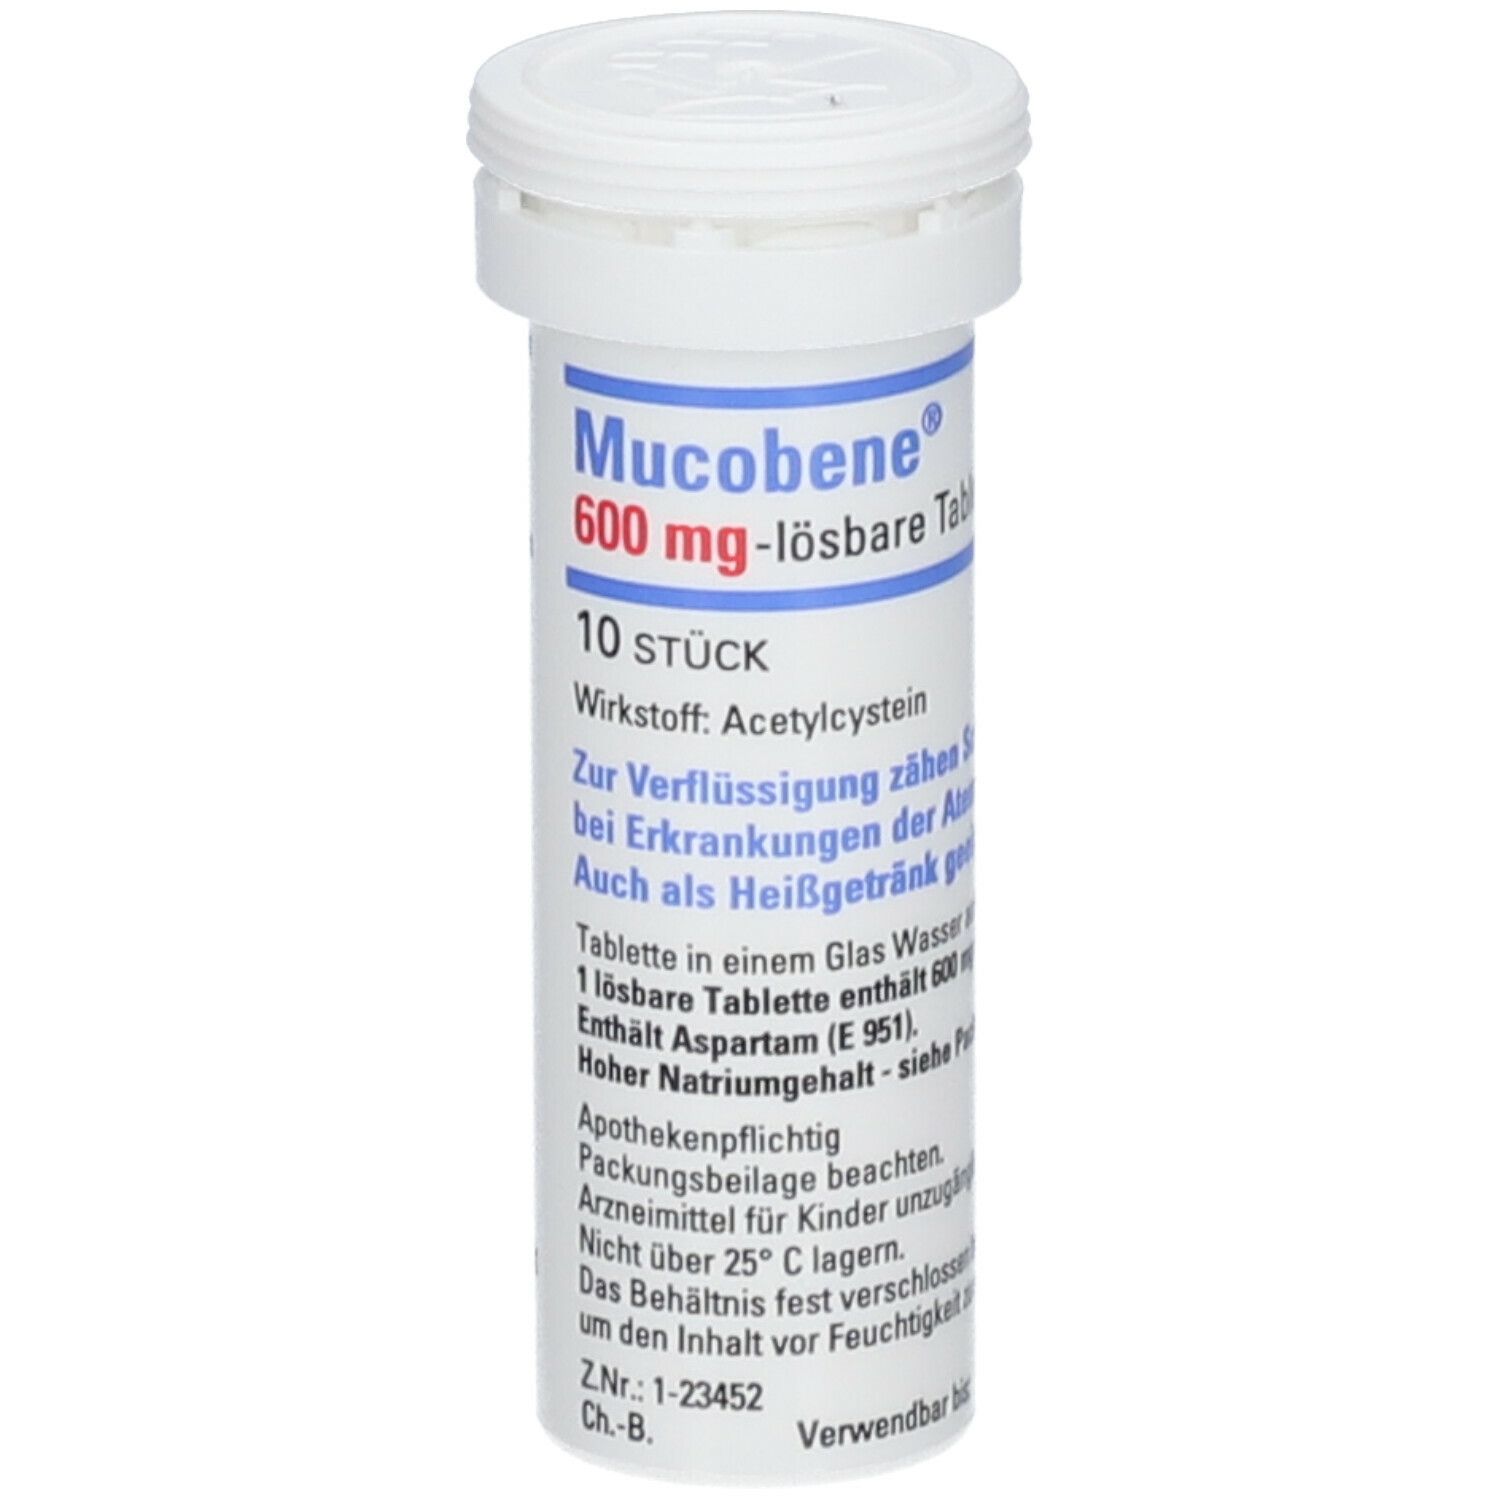 Mucobene® 600 mg-lösbare Tabletten